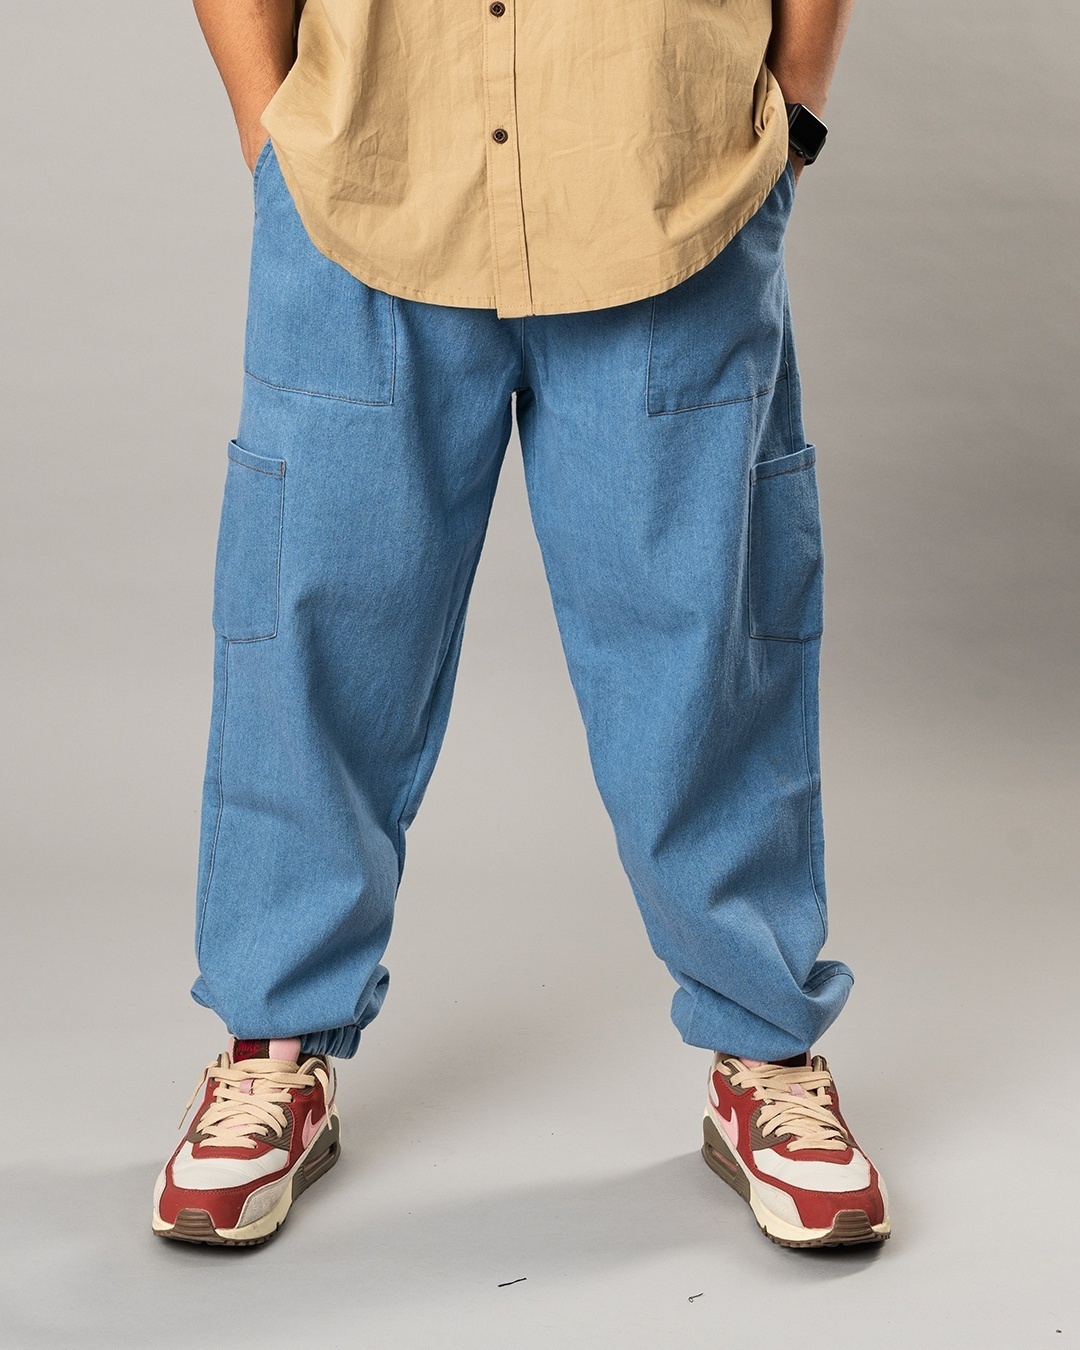 My Thai Pants: Patchwork Jeans Harem Pants Boho Hippie Trousers Aladdin  Bloomers | eBay